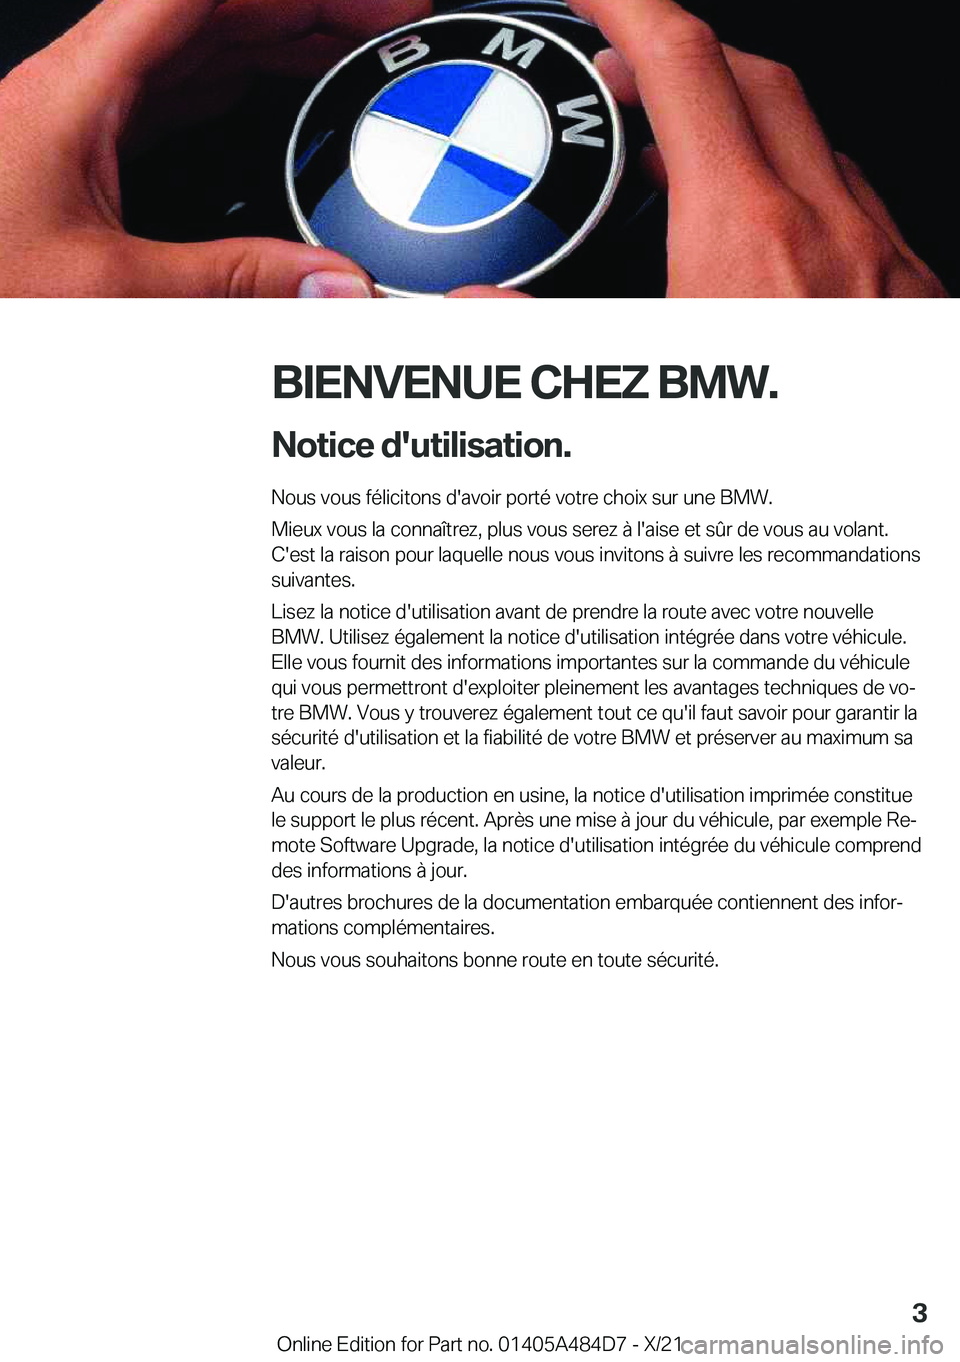 BMW 7 SERIES 2022  Notices Demploi (in French) �B�I�E�N�V�E�N�U�E��C�H�E�Z��B�M�W�.�N�o�t�i�c�e��d�'�u�t�i�l�i�s�a�t�i�o�n�.
�N�o�u�s��v�o�u�s��f�é�l�i�c�i�t�o�n�s��d�'�a�v�o�i�r��p�o�r�t�é��v�o�t�r�e��c�h�o�i�x��s�u�r��u�n�e�